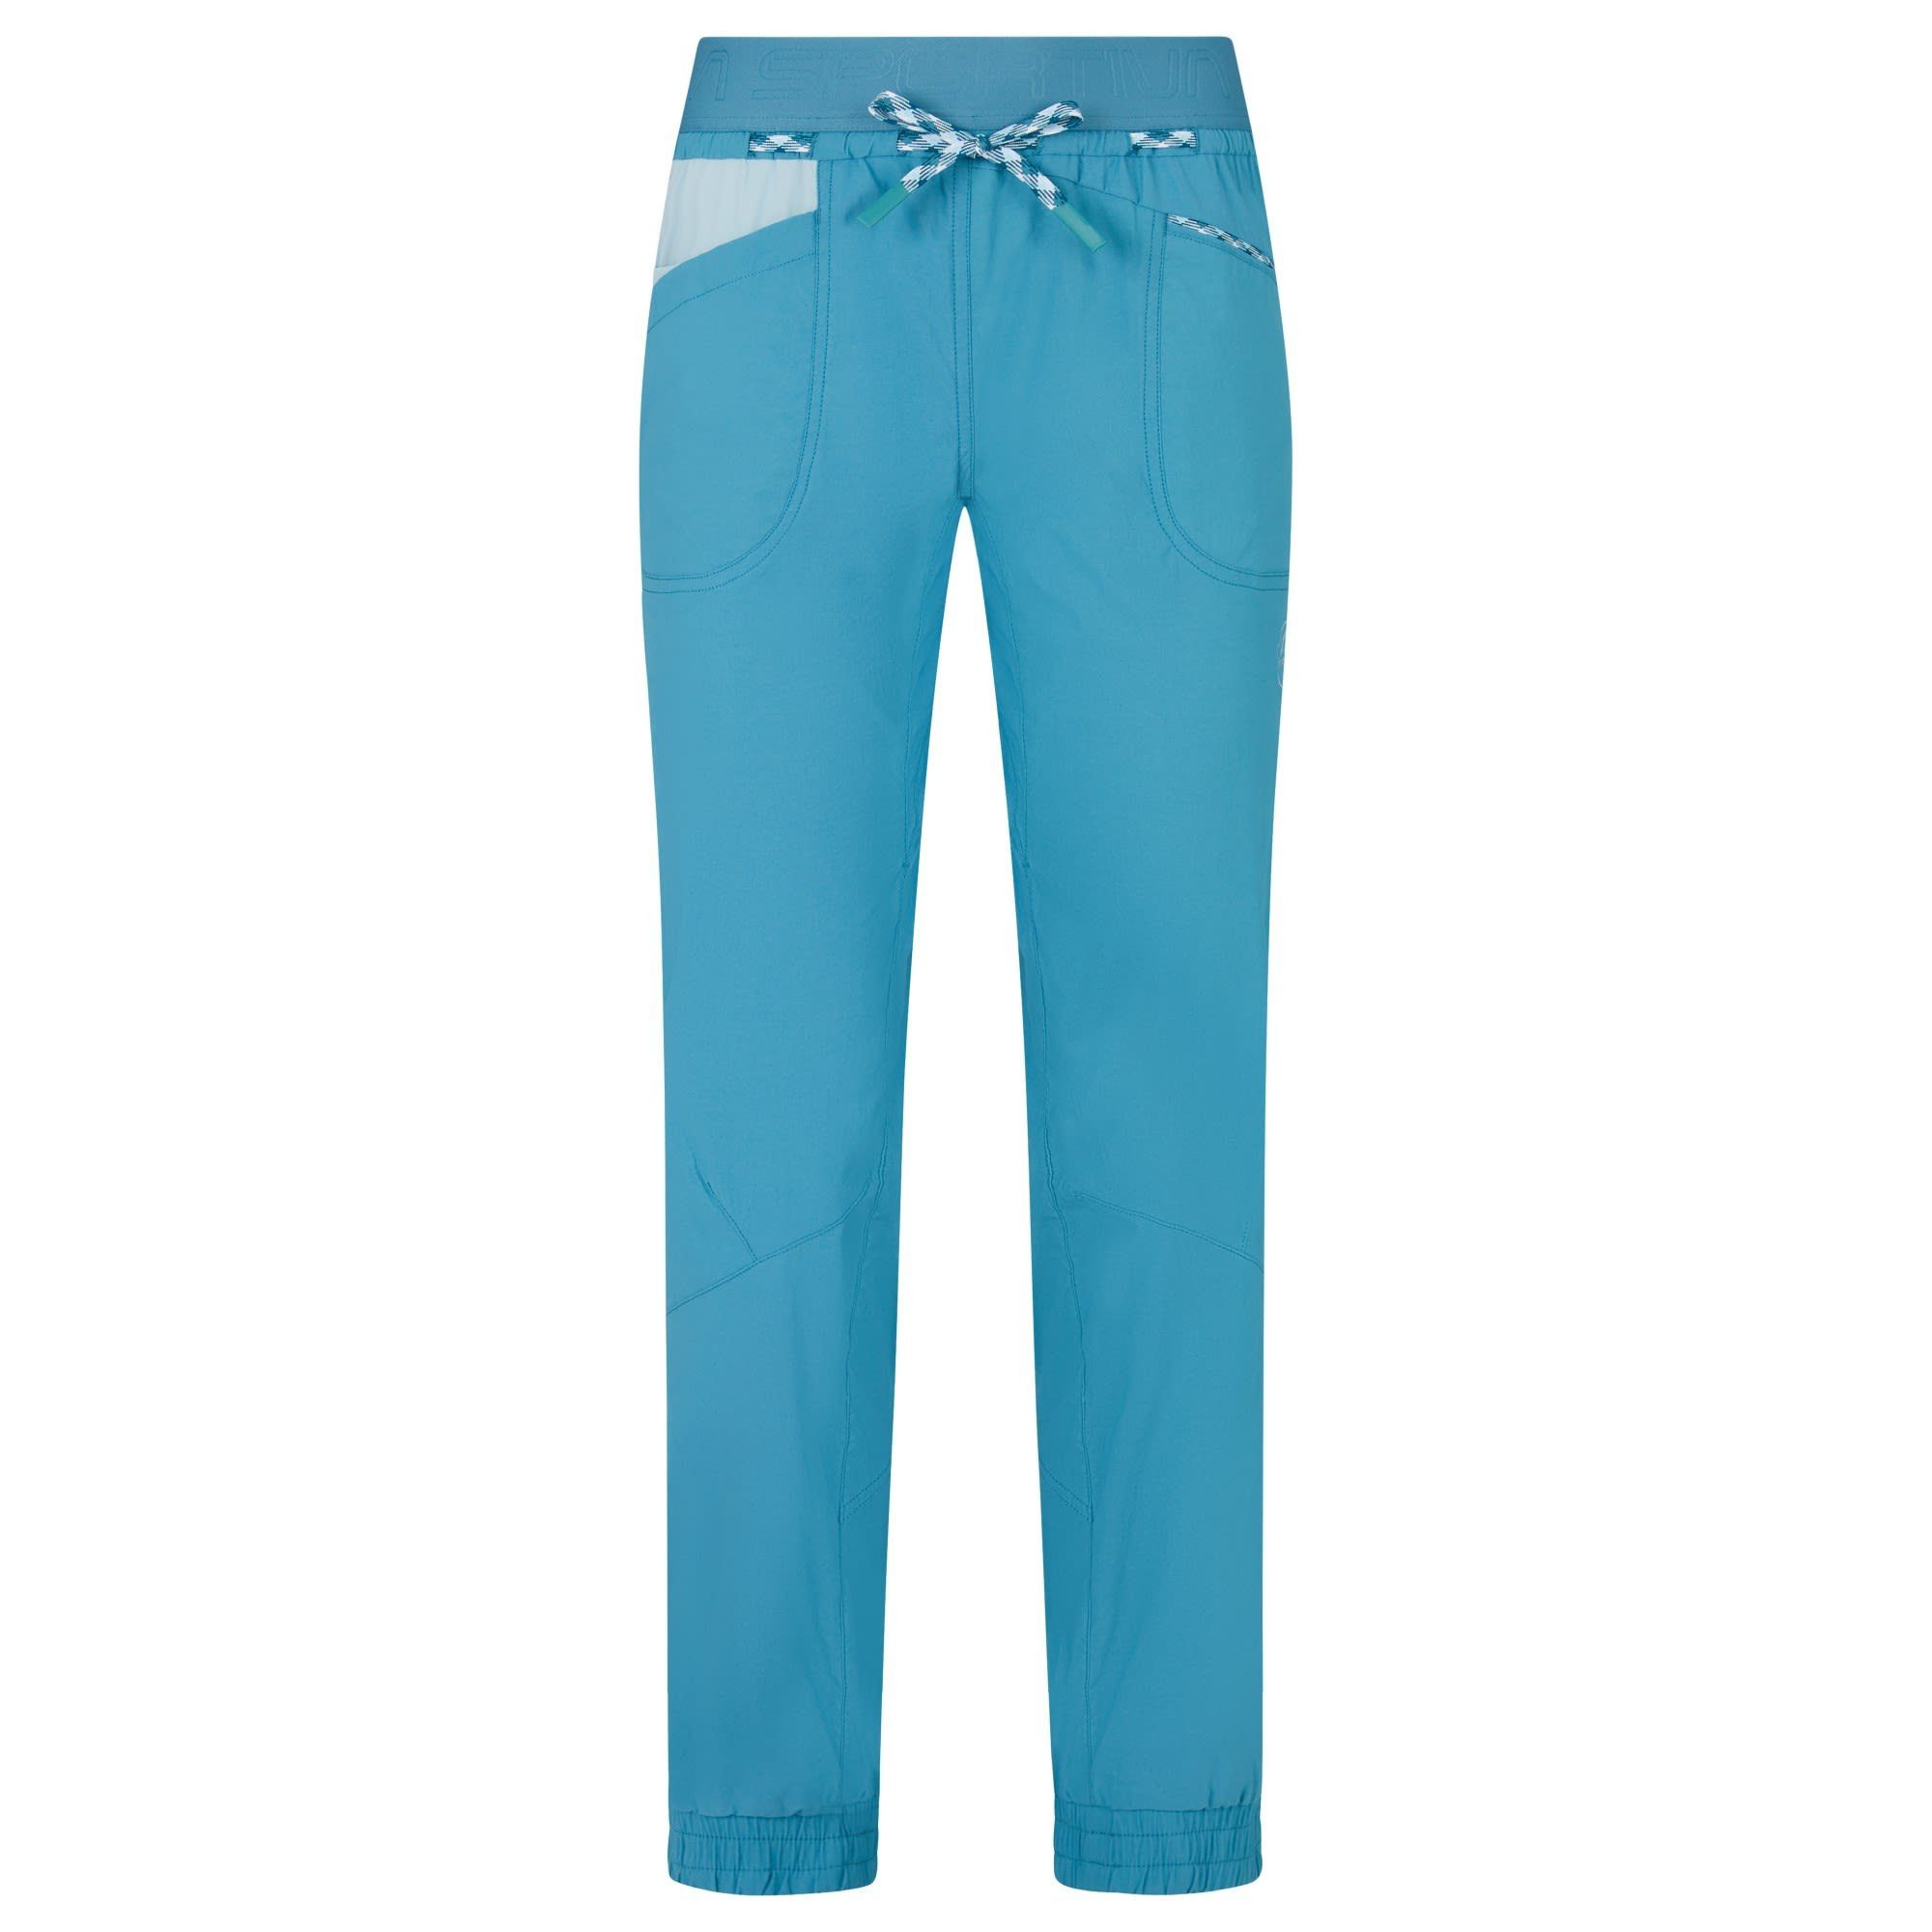 Hose Damen blau W La La Sportiva Pant & Sportiva Hose Shorts Mantra